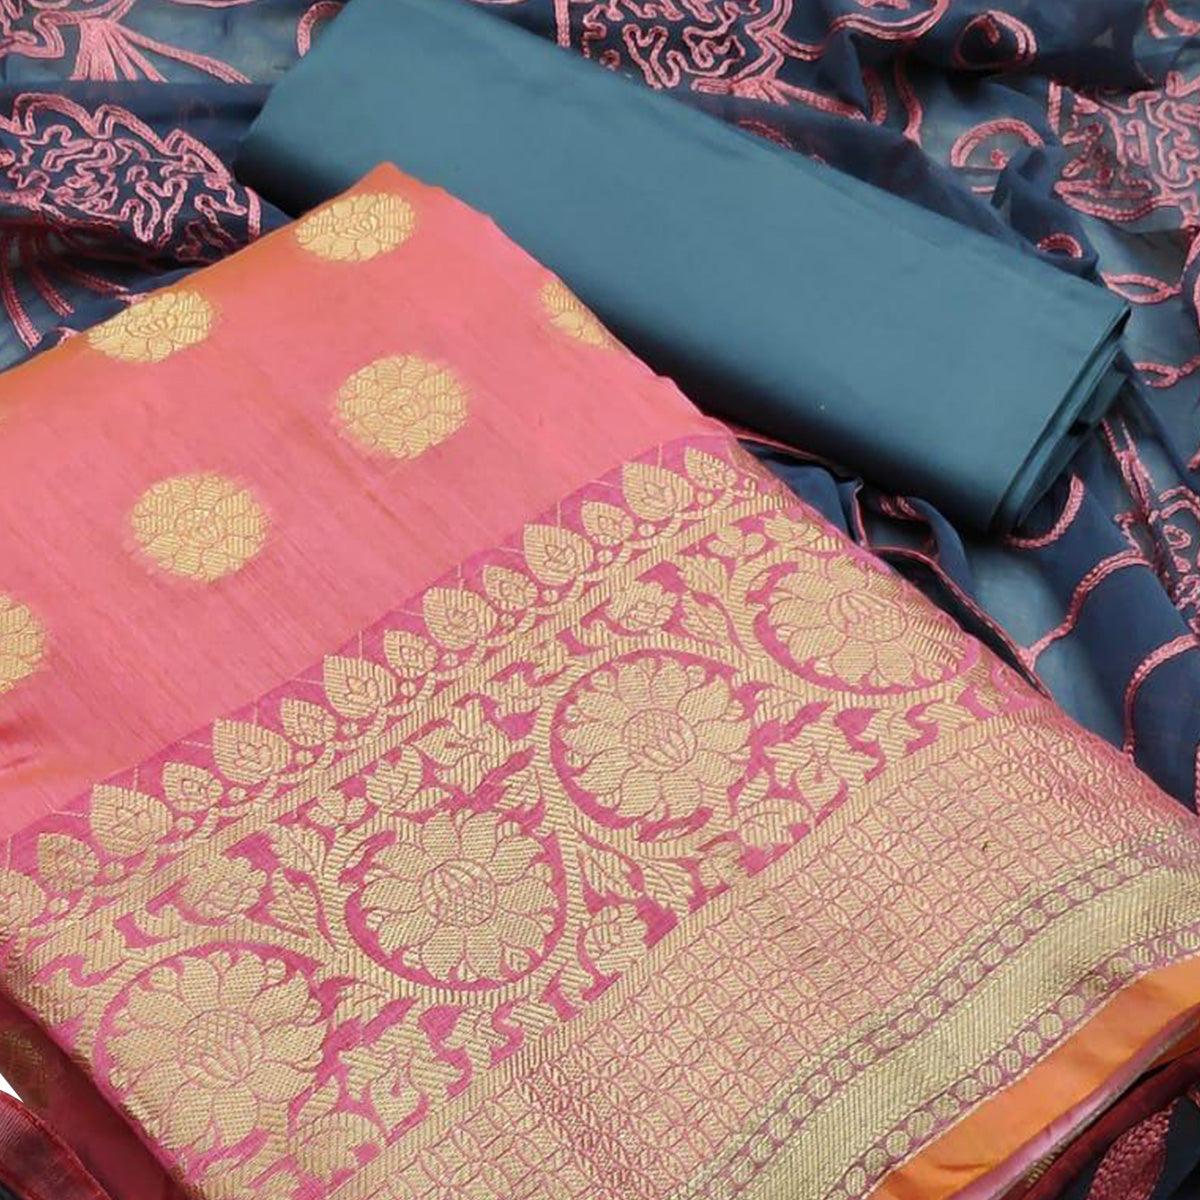 Radiant Pink Colored Casual Wear Woven Banarasi Silk Dress Material - Peachmode